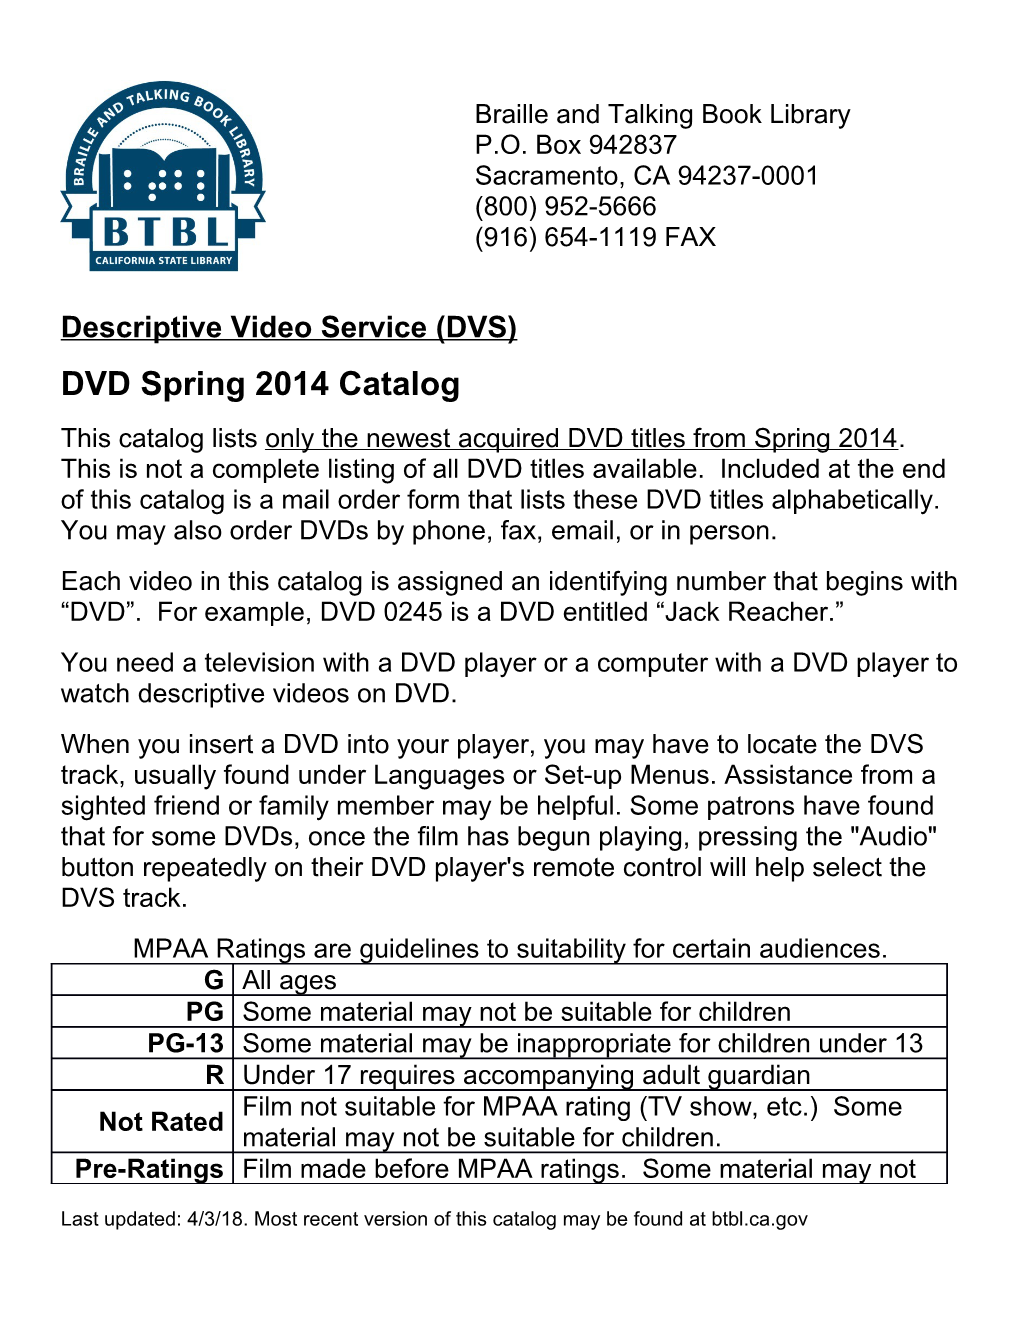 Descriptive Video Service (DVS) s2